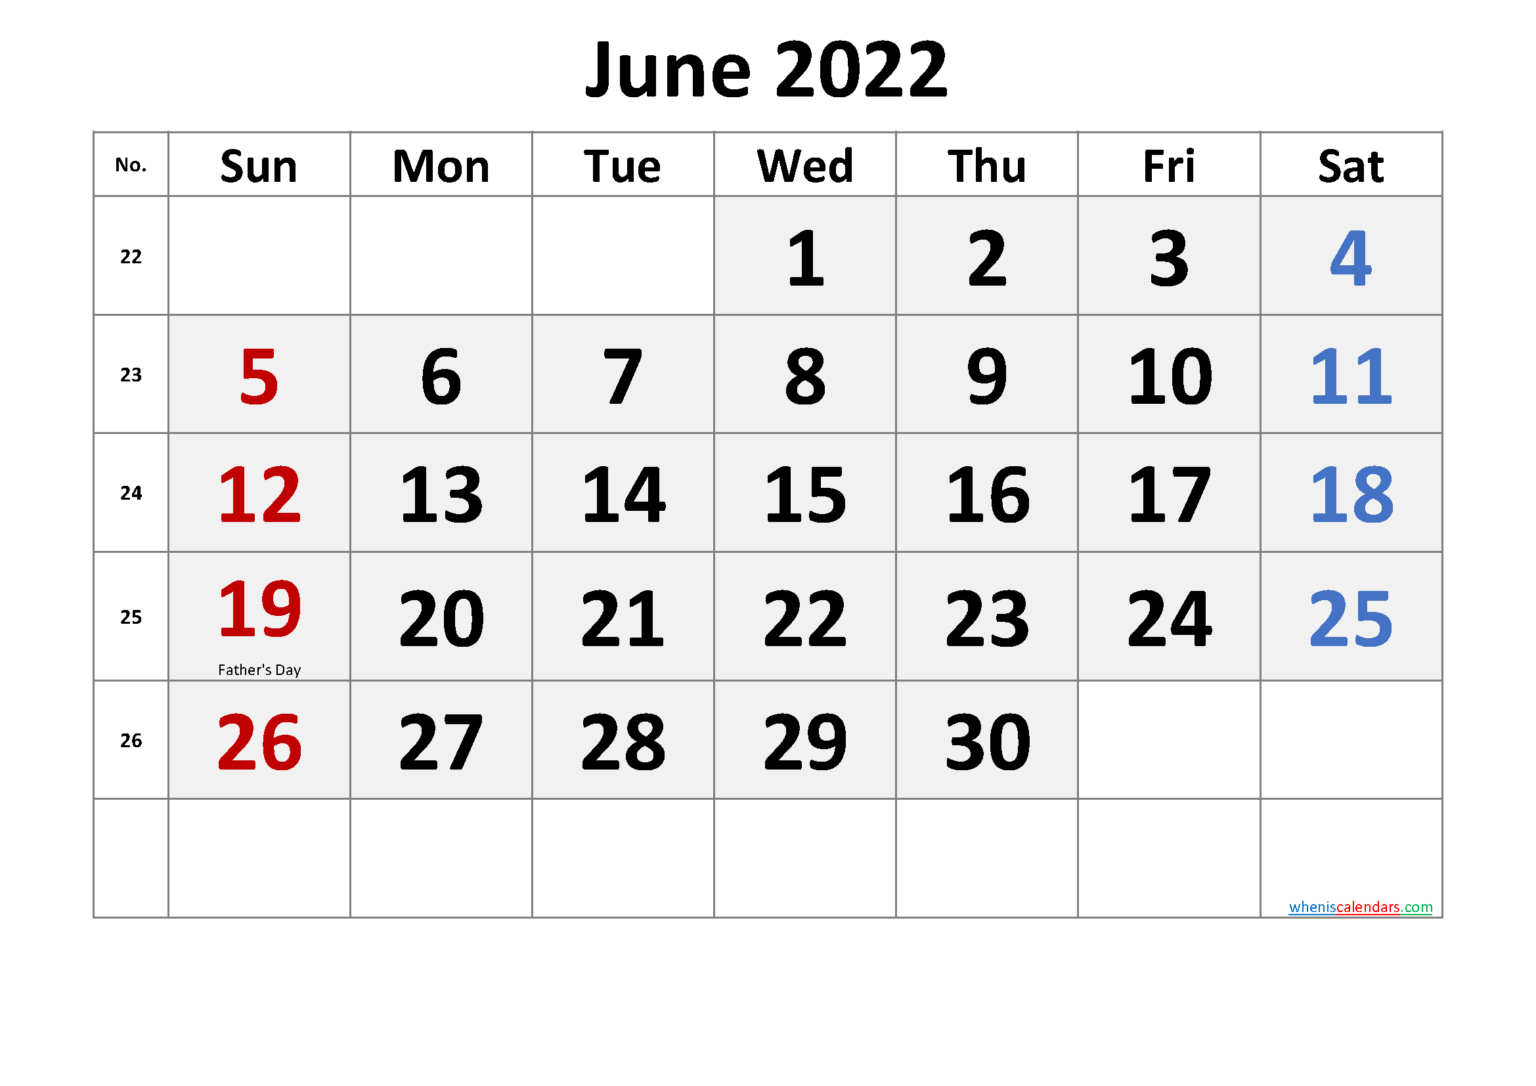 2022 June Calendar - Blank Calendar Printable  Lunar Calendar 2022 June